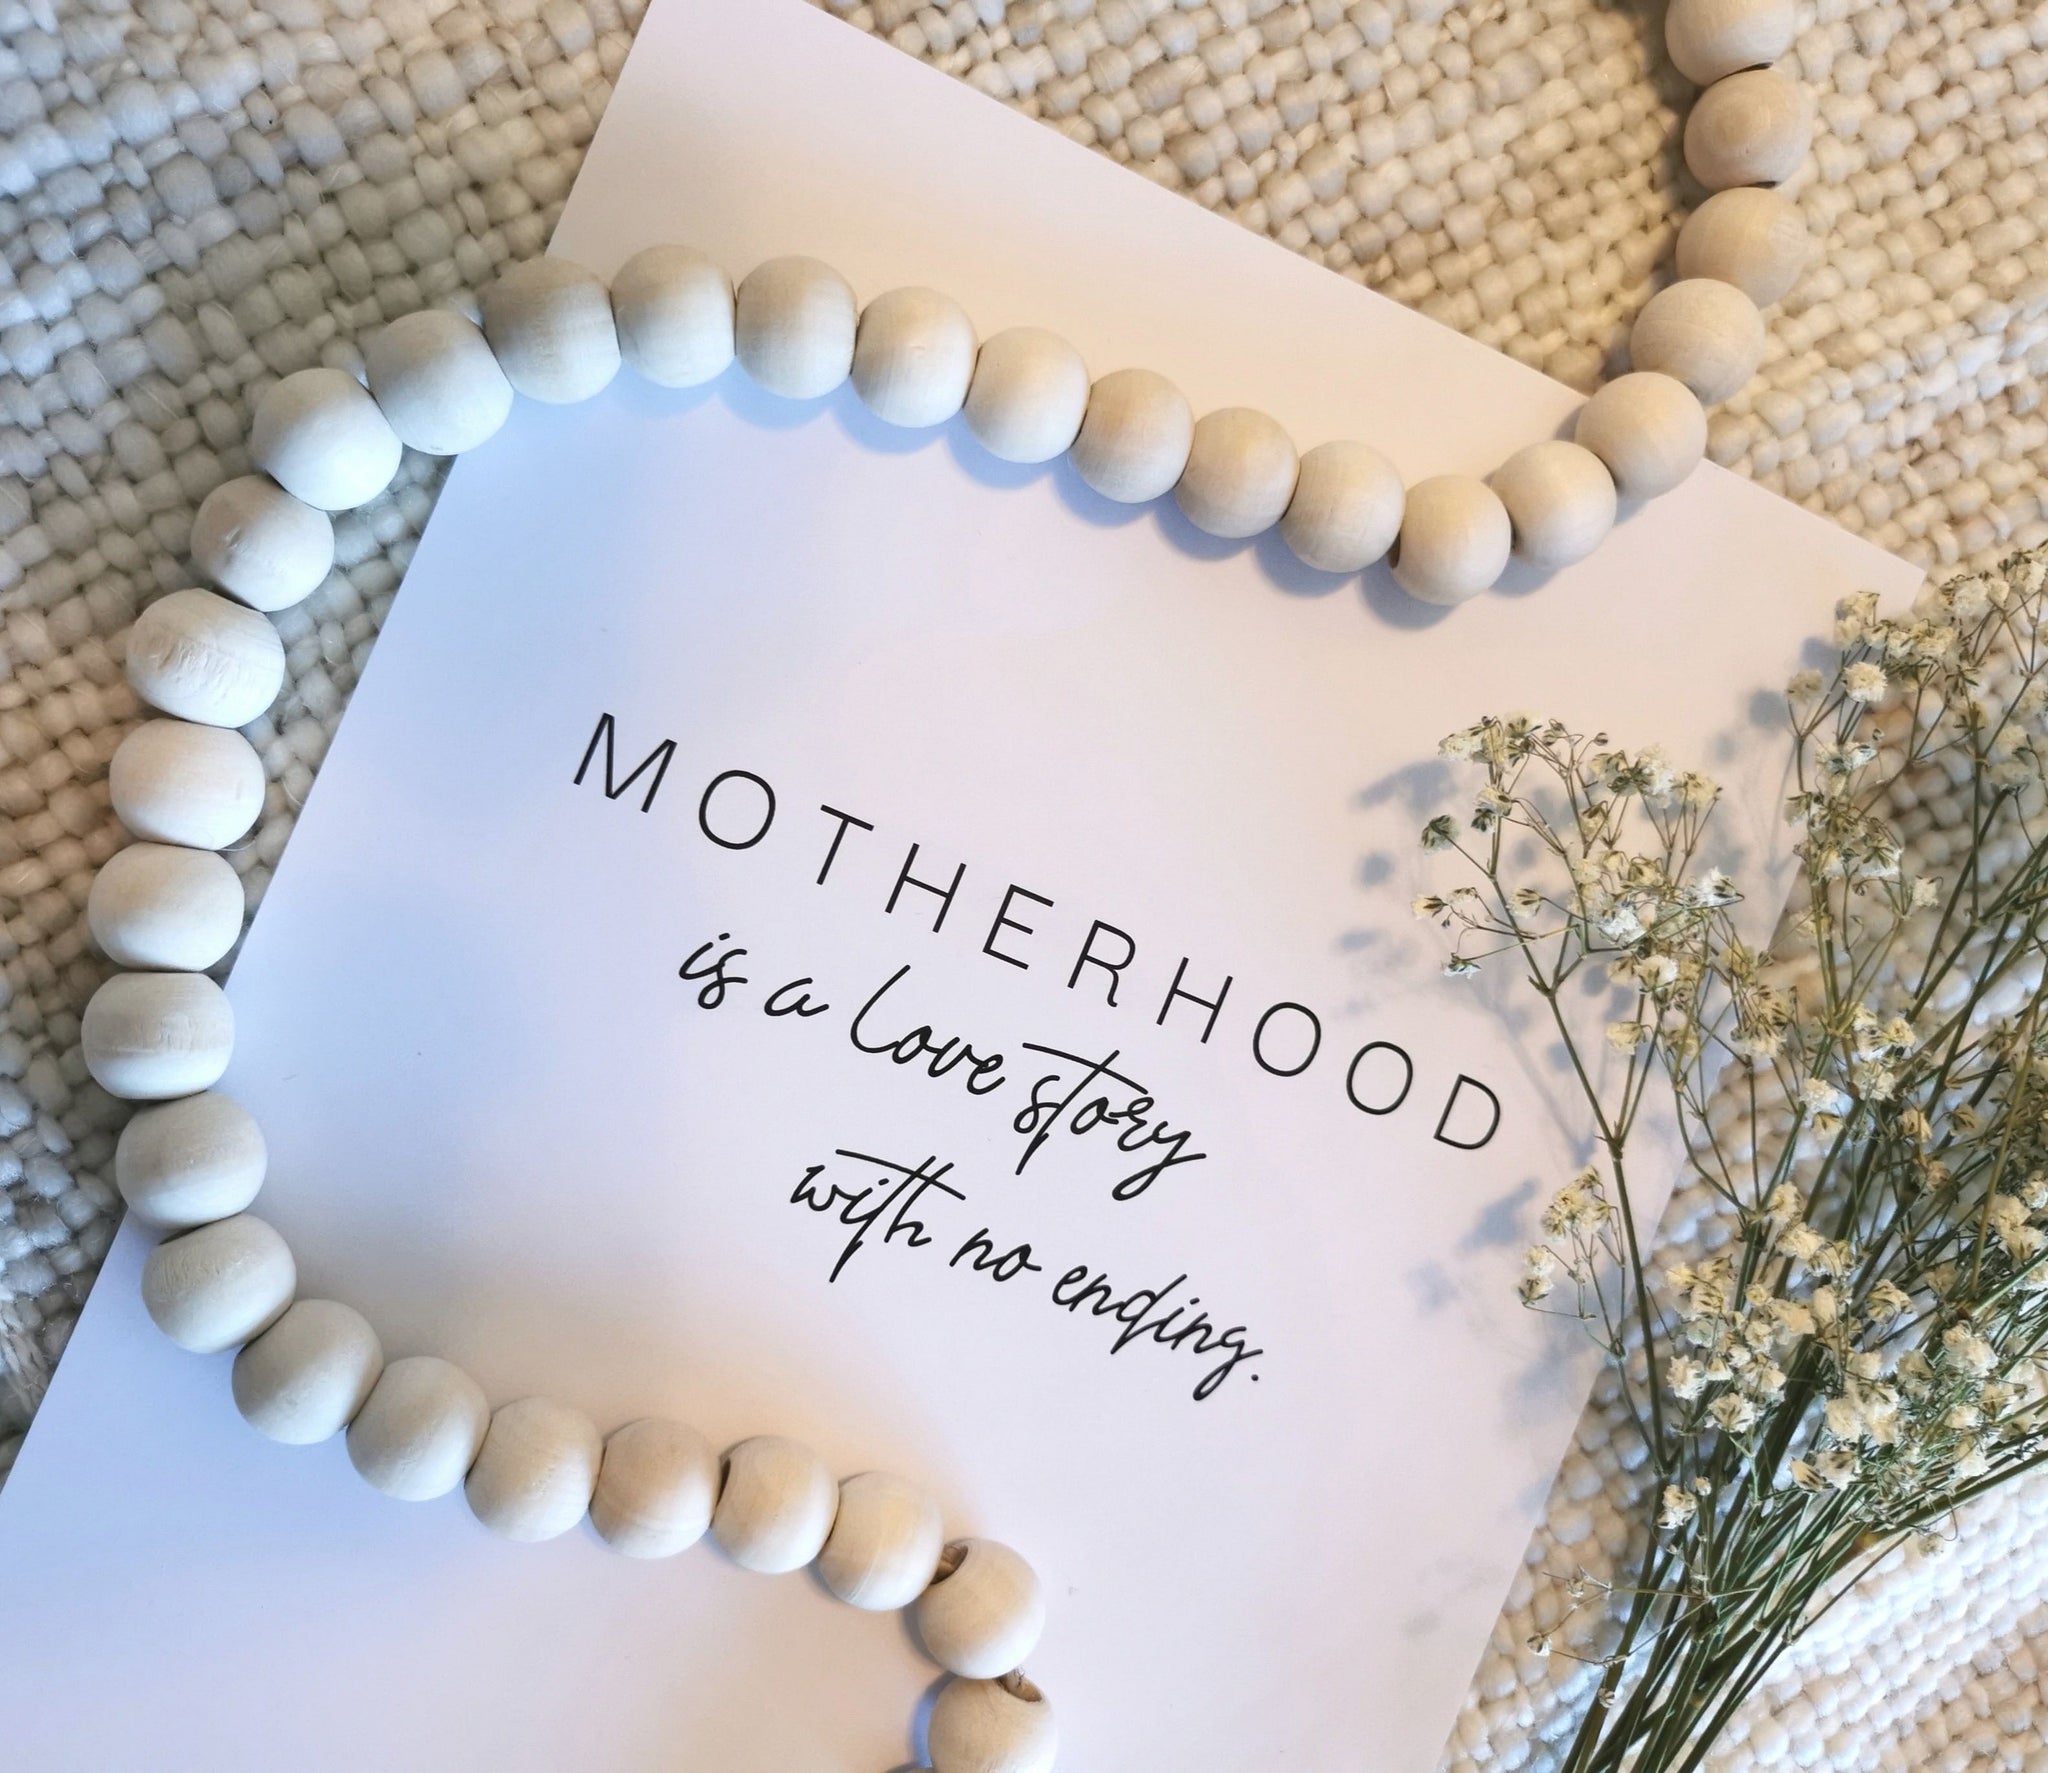 Motherhood love story - Affiche décorative